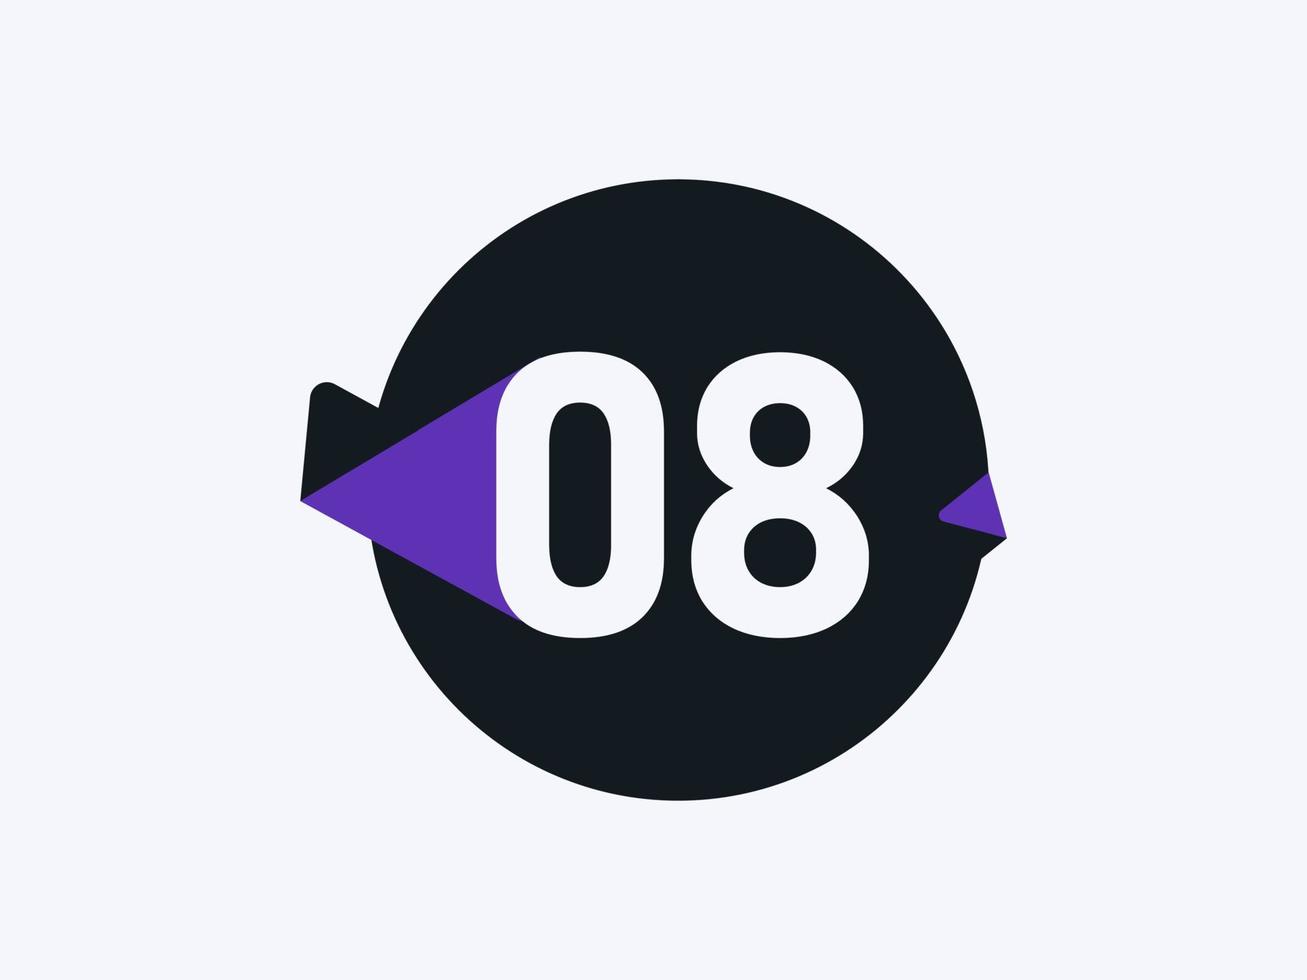 8 Number logo icon design vector image. Number logo icon design vector image